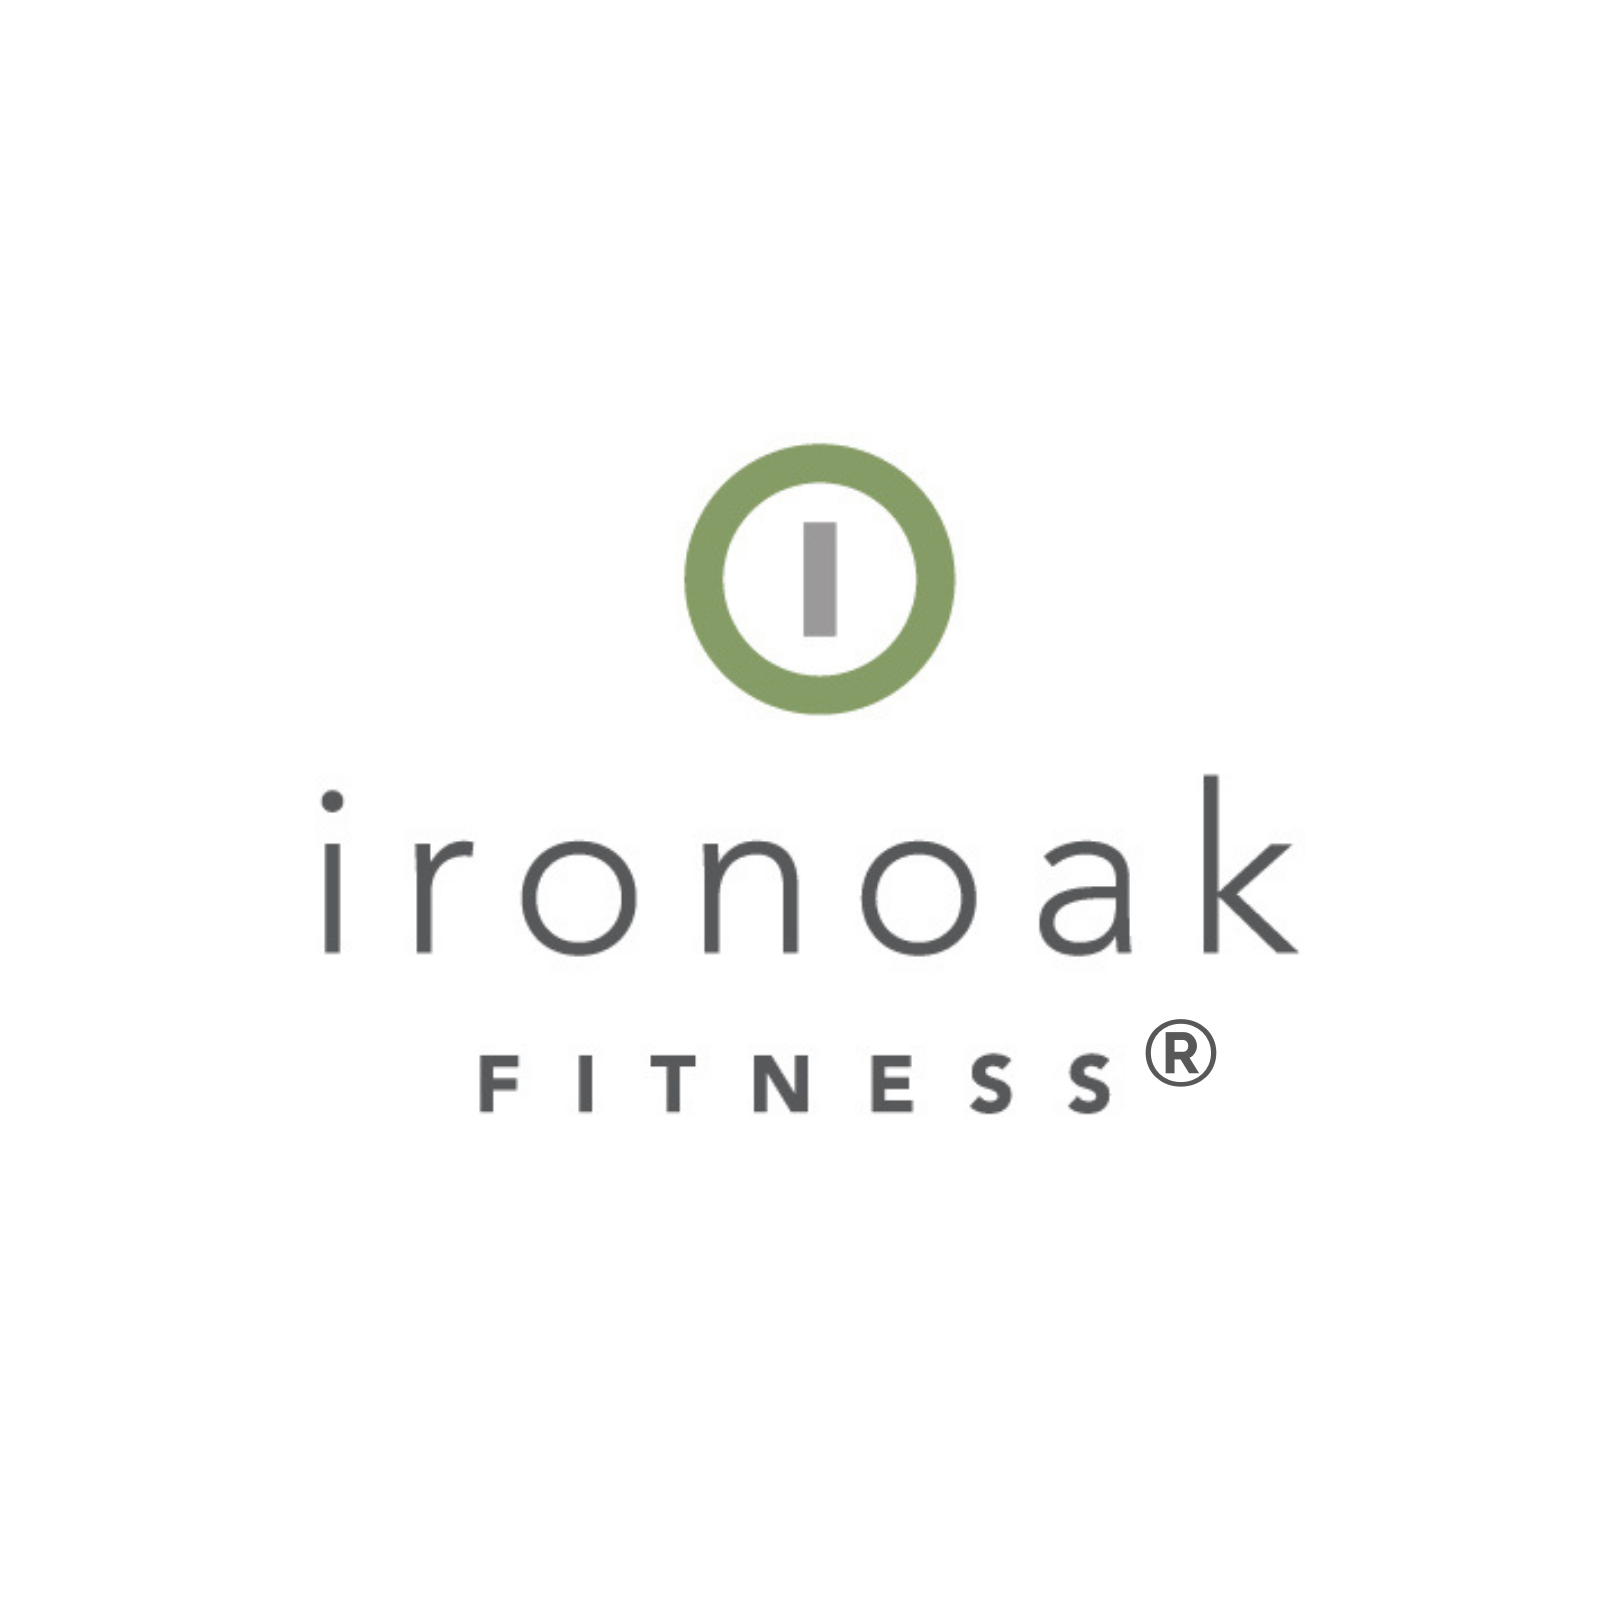 Iron Oak Fitness